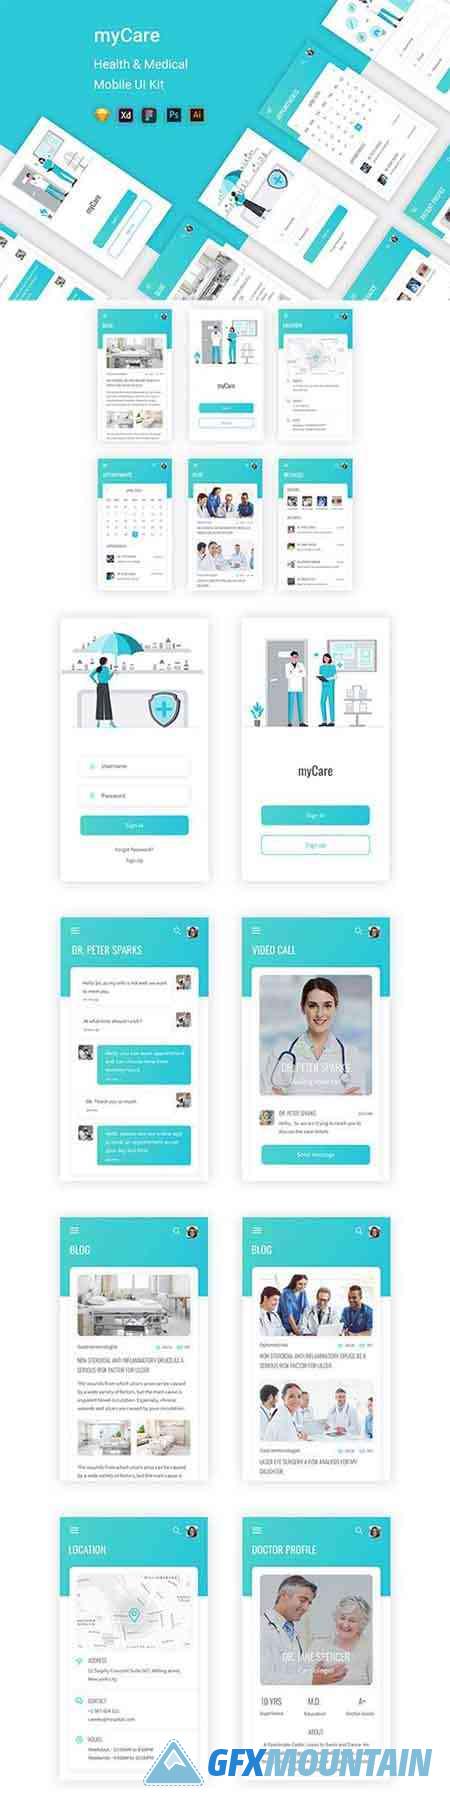 myCare - Health & Medical Mobile App